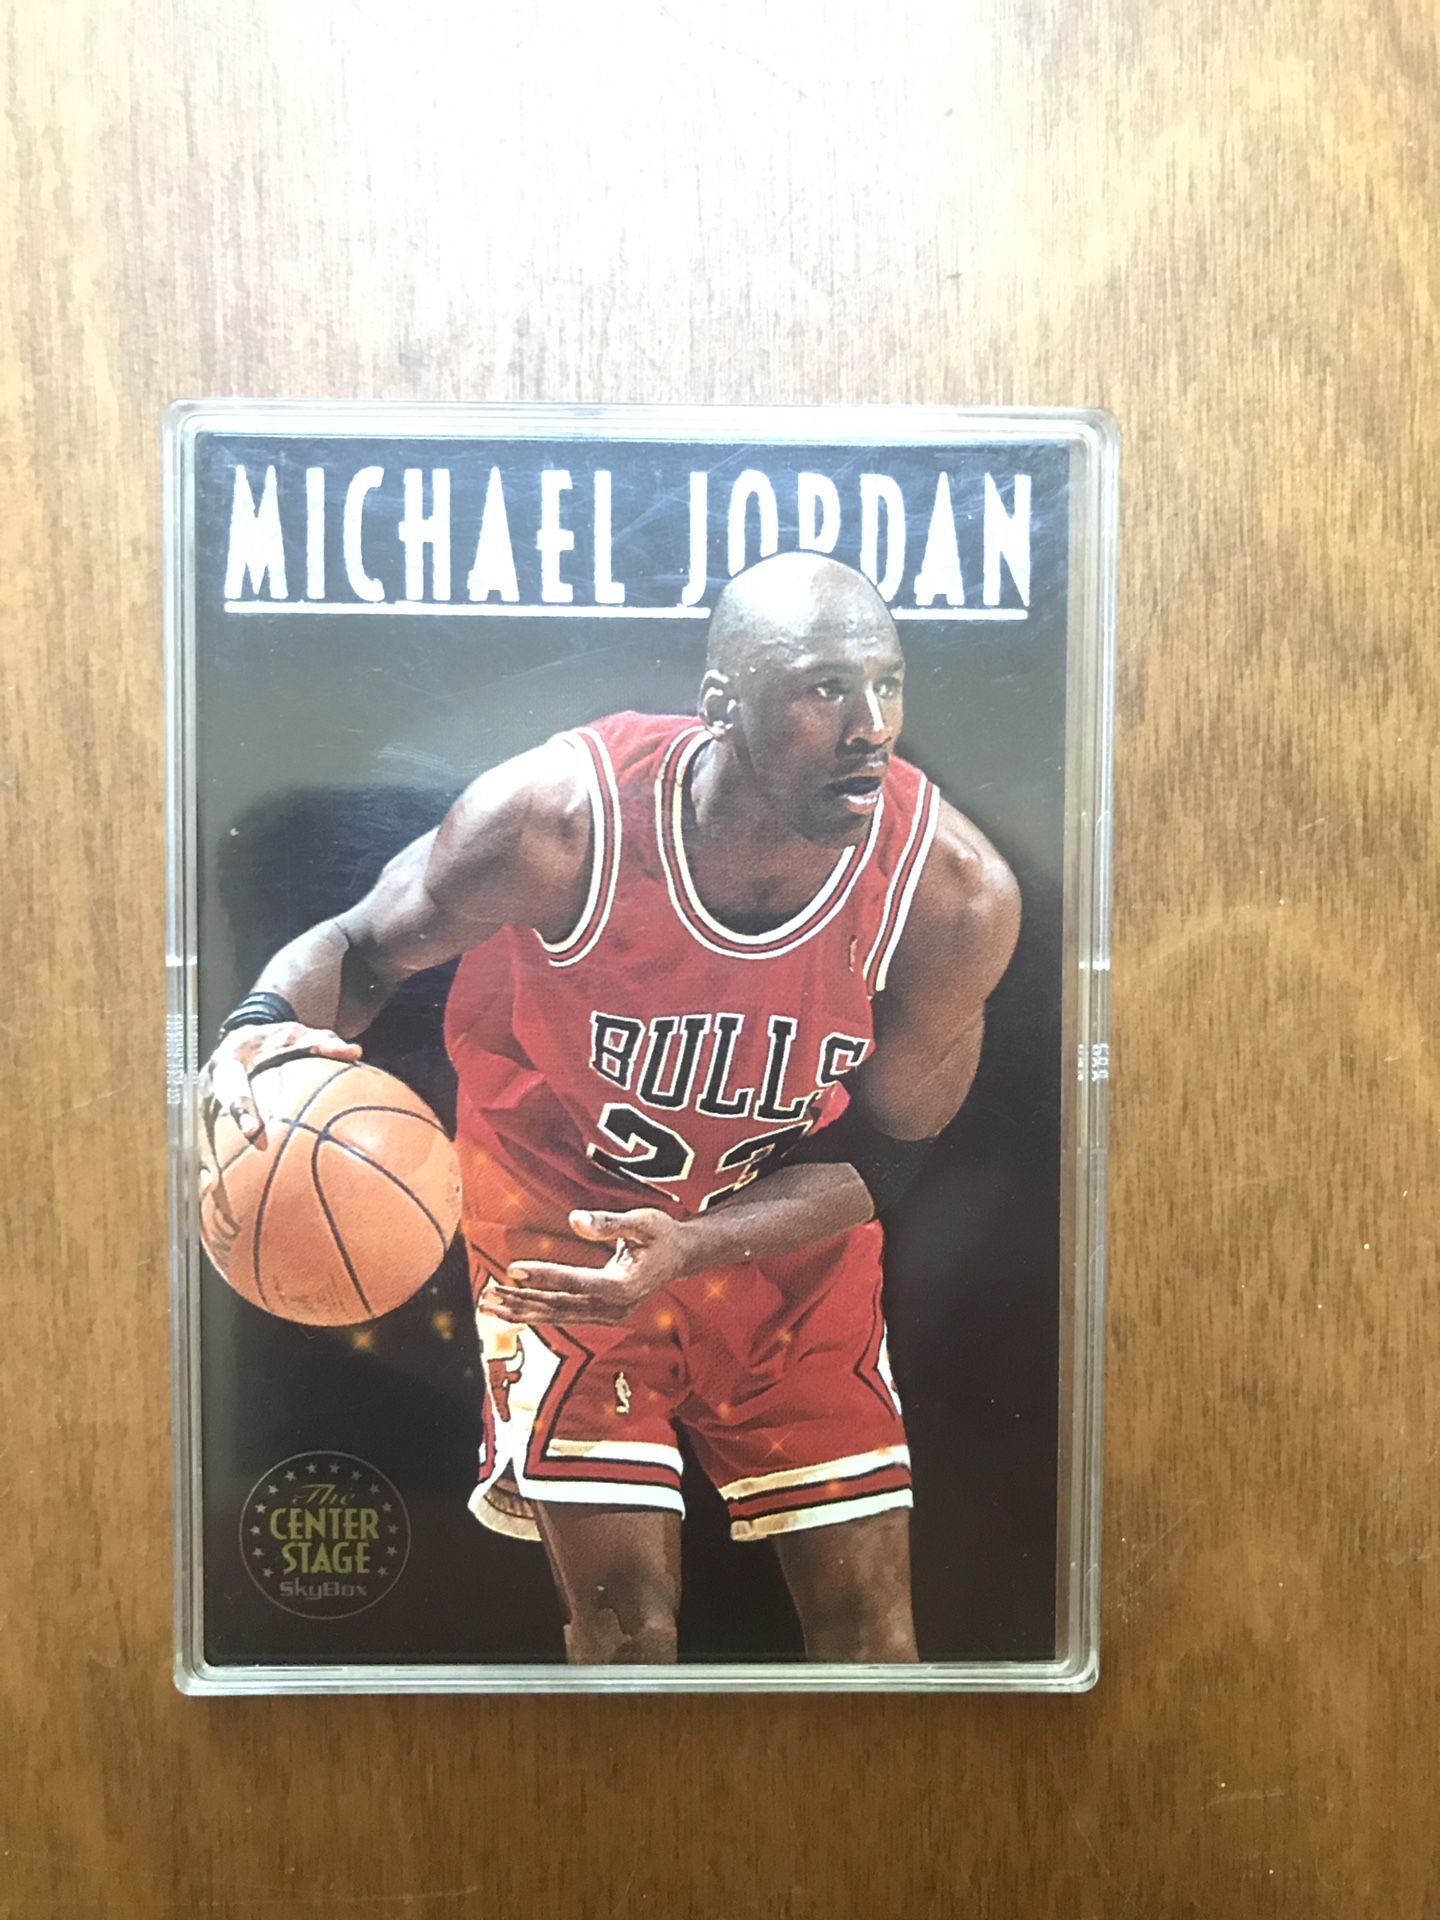 Michael Jordan center stage skybox card